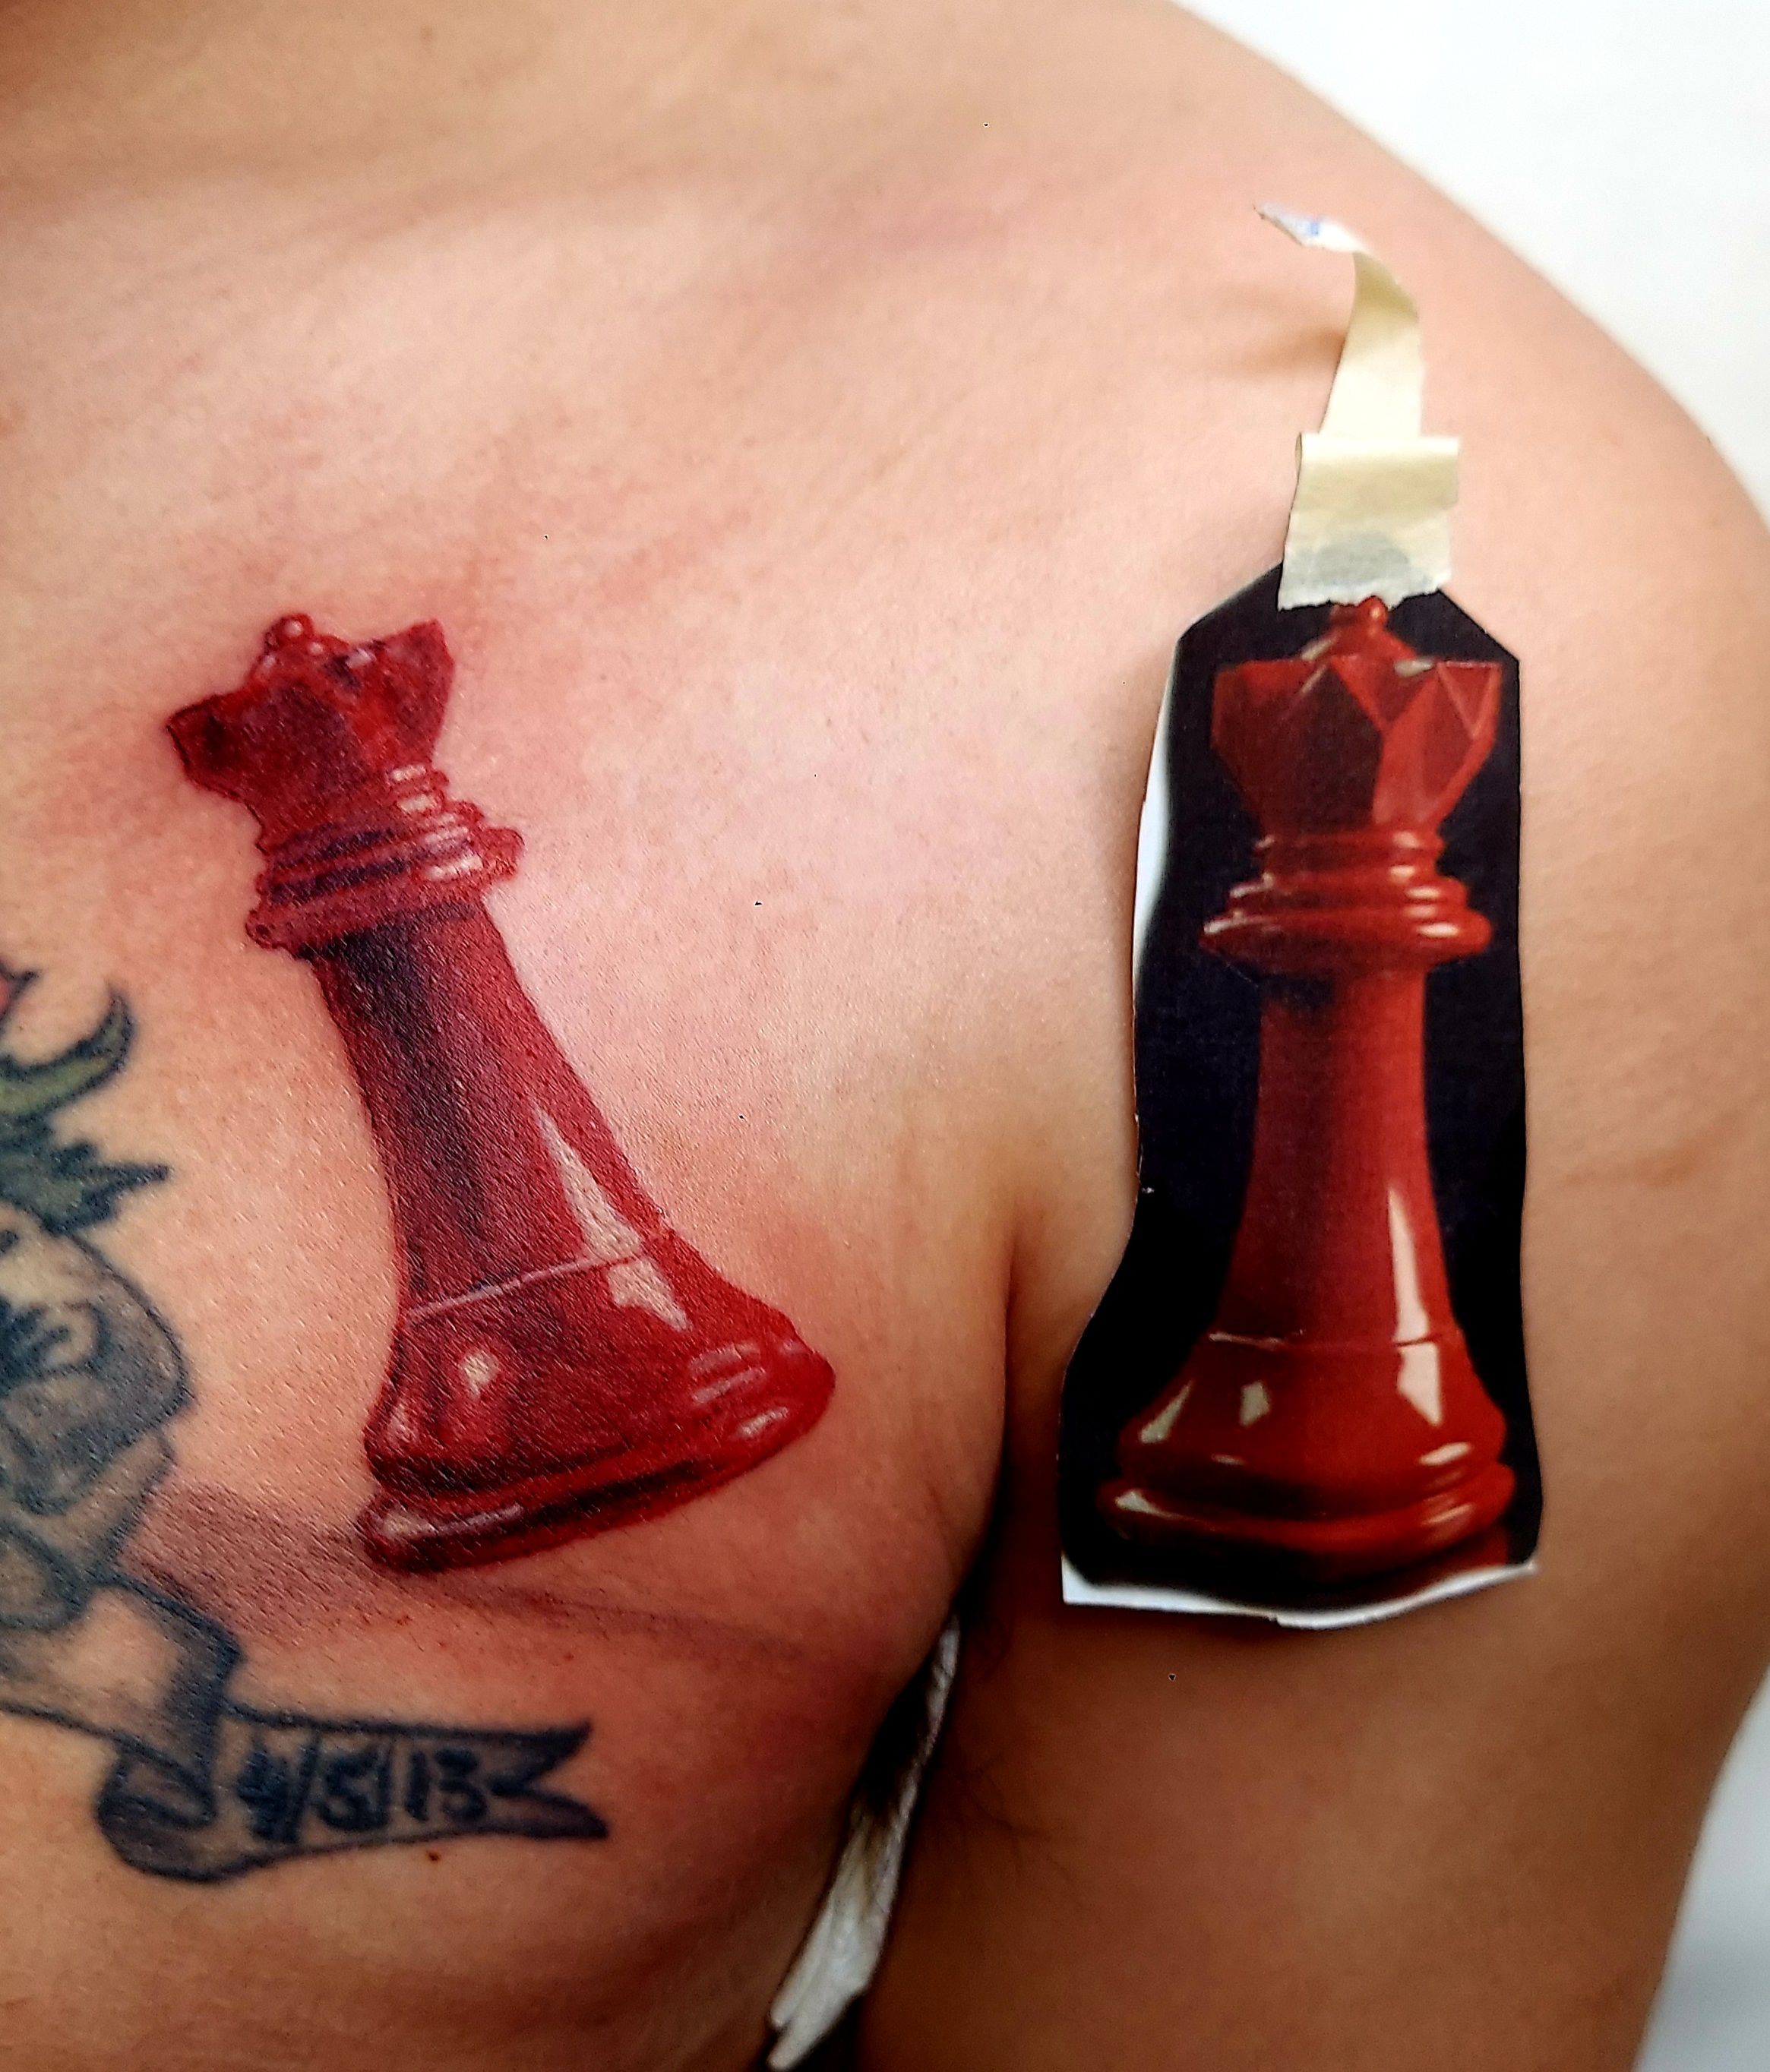 Red Blaze Tattoo Studio - Tattoo de casal, peças xadrez #tattoo #tattooed  #tattooxadrez #xadrez #rainha #rei #king #queen #sp11 #sp  #redblazetattoostudio